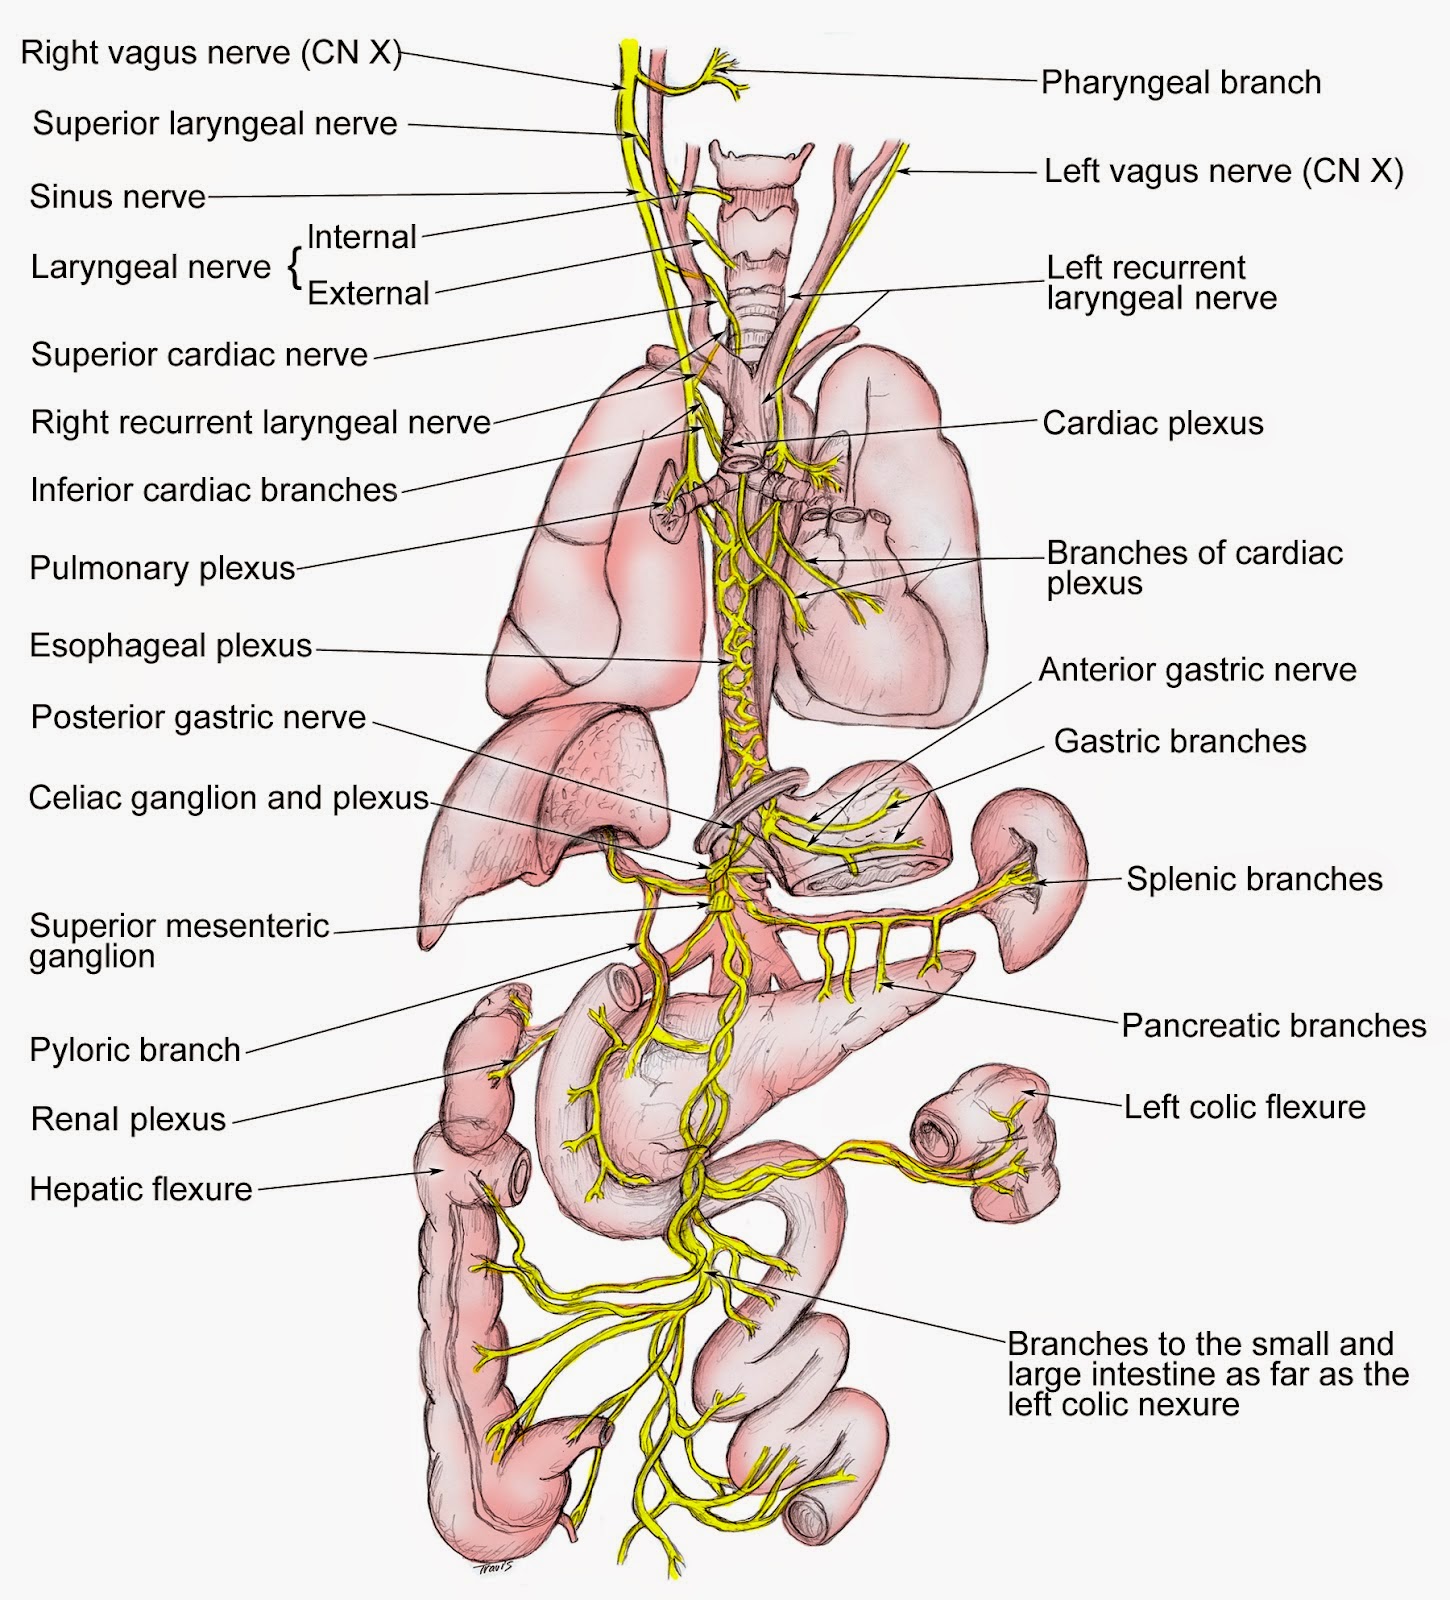 vagus nerve image